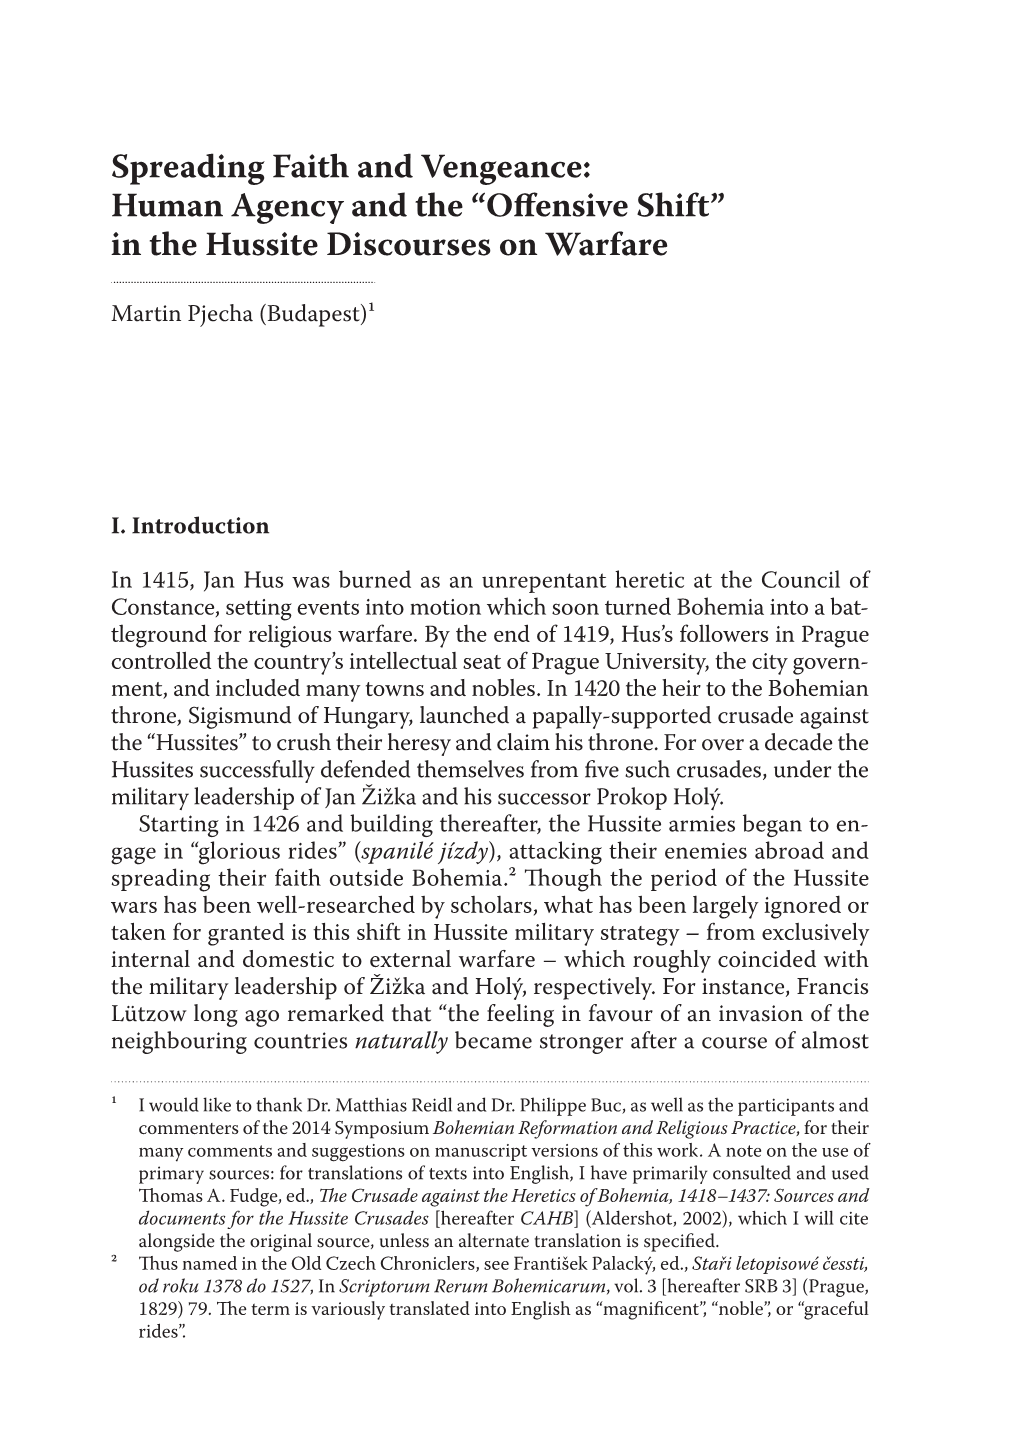 In the Hussite Discourses on Warfare